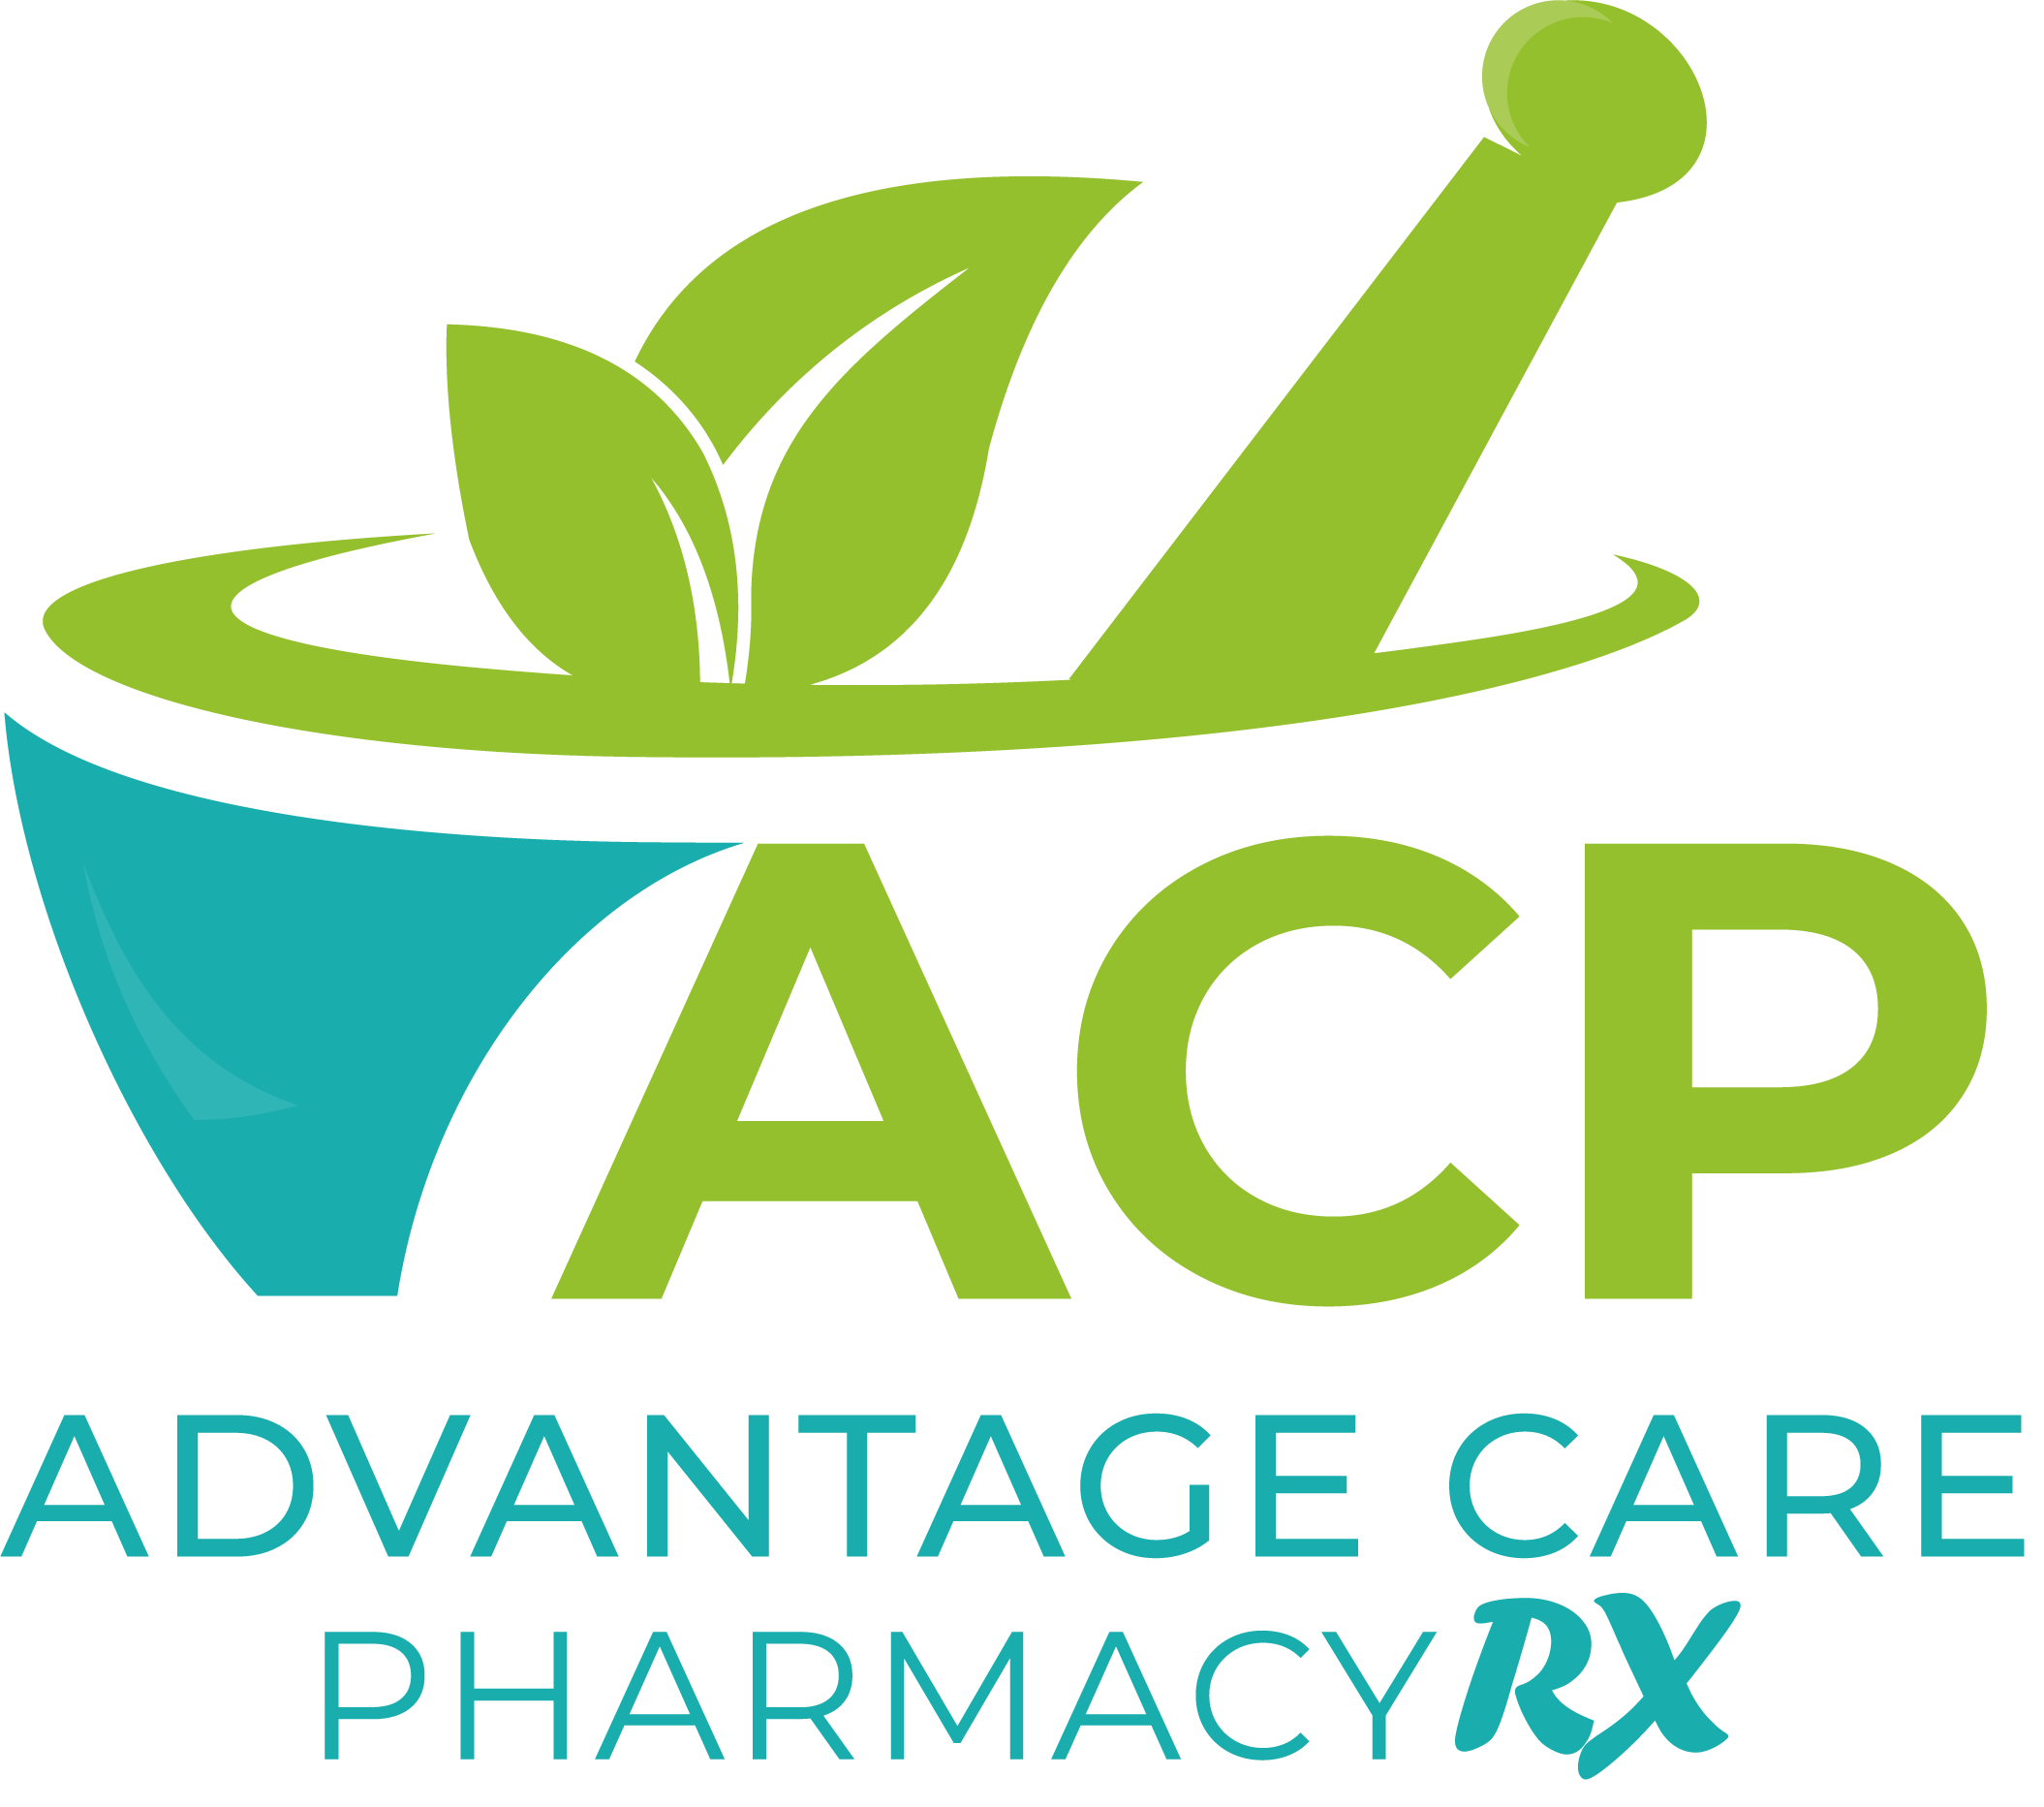 Advantage Care Pharmacy Services